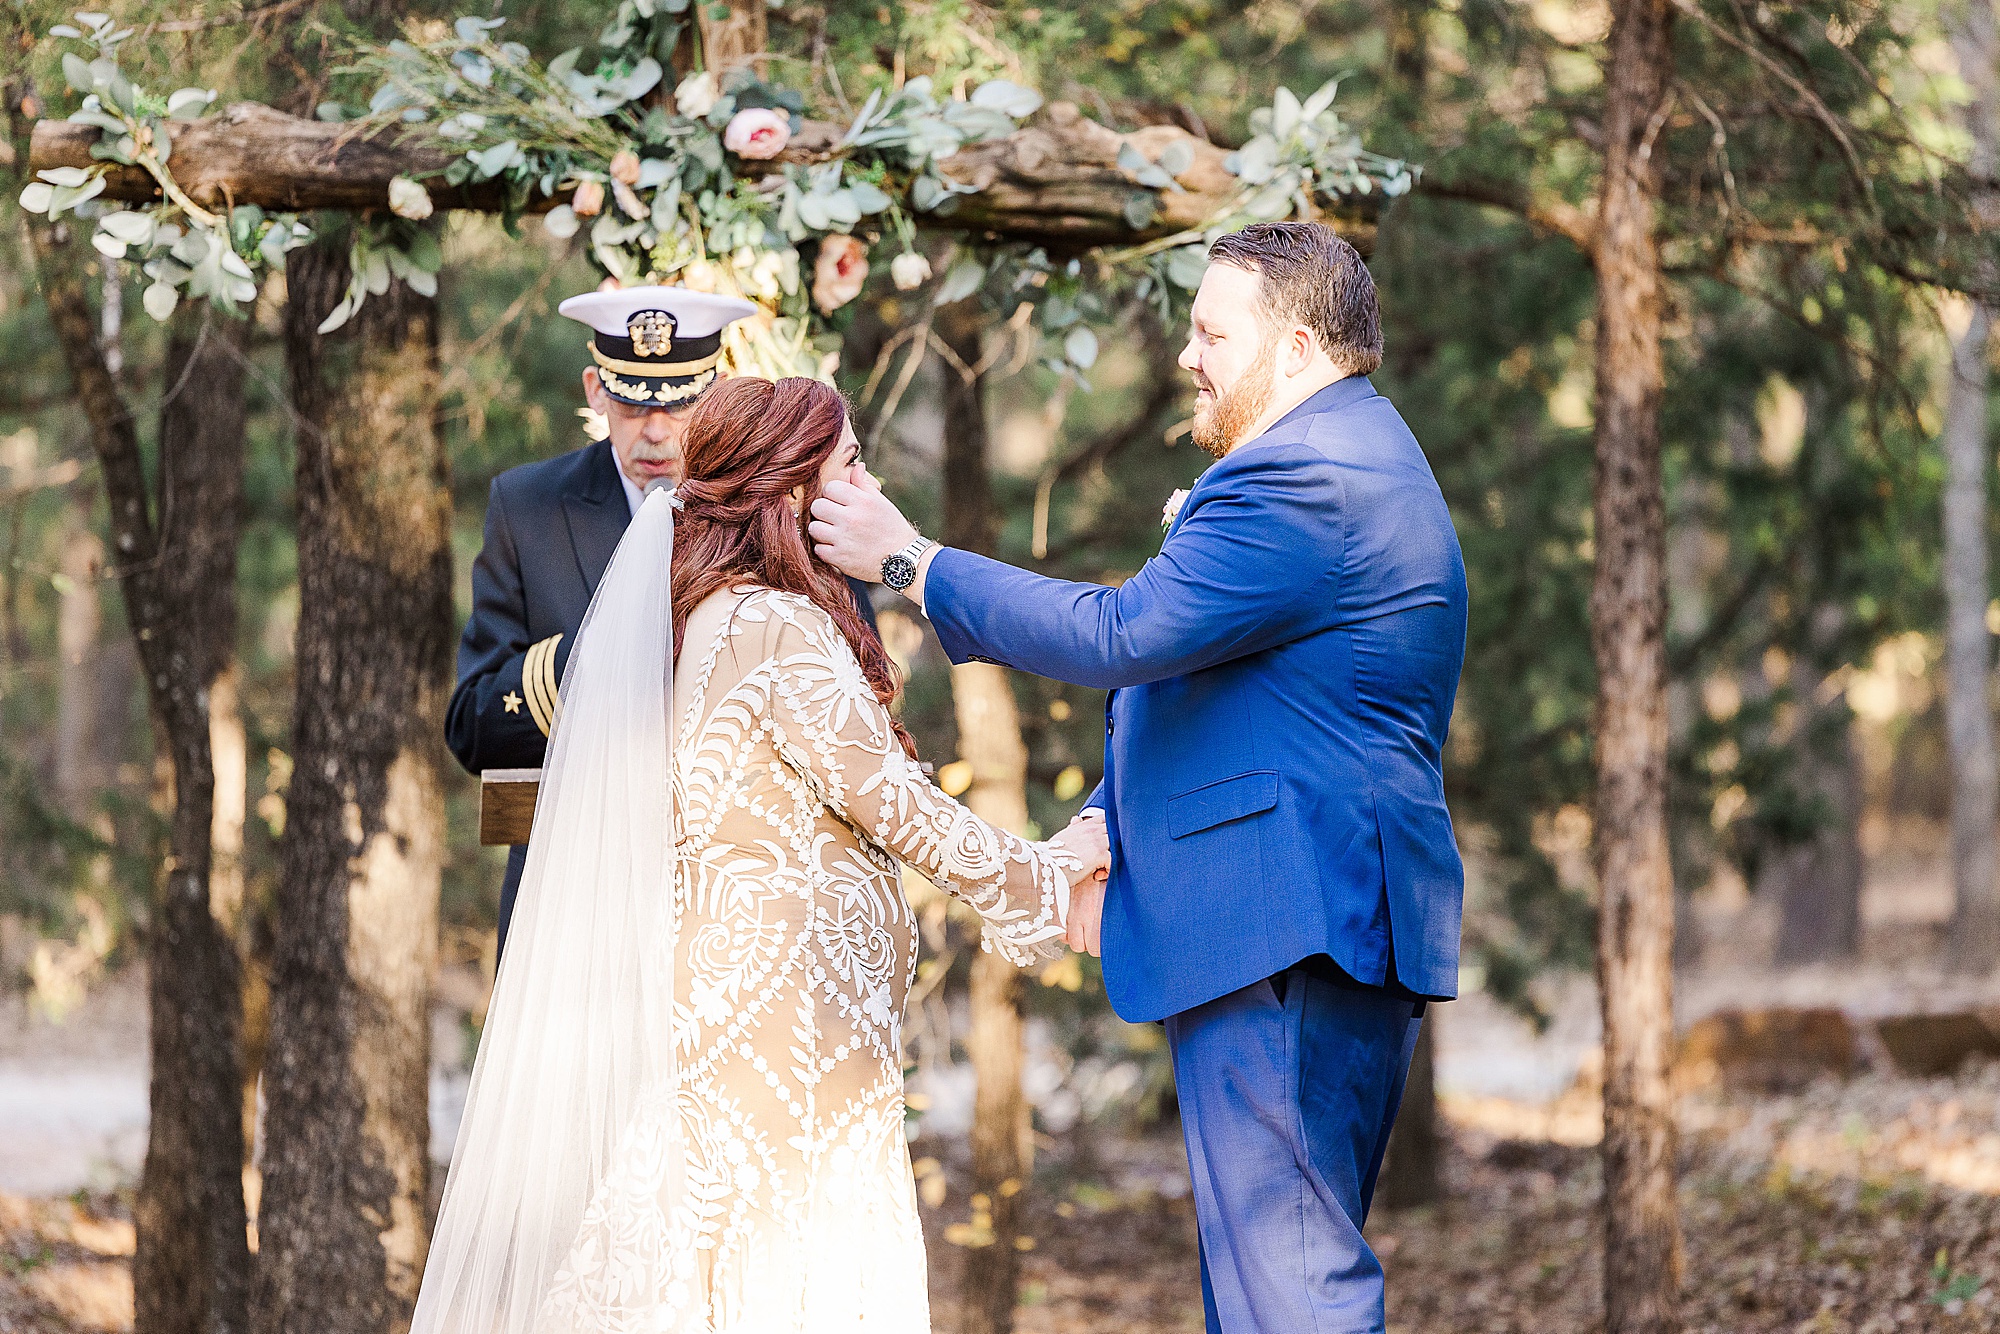 groom wipes bride's tears during outdoor wedding ceremony in Texas